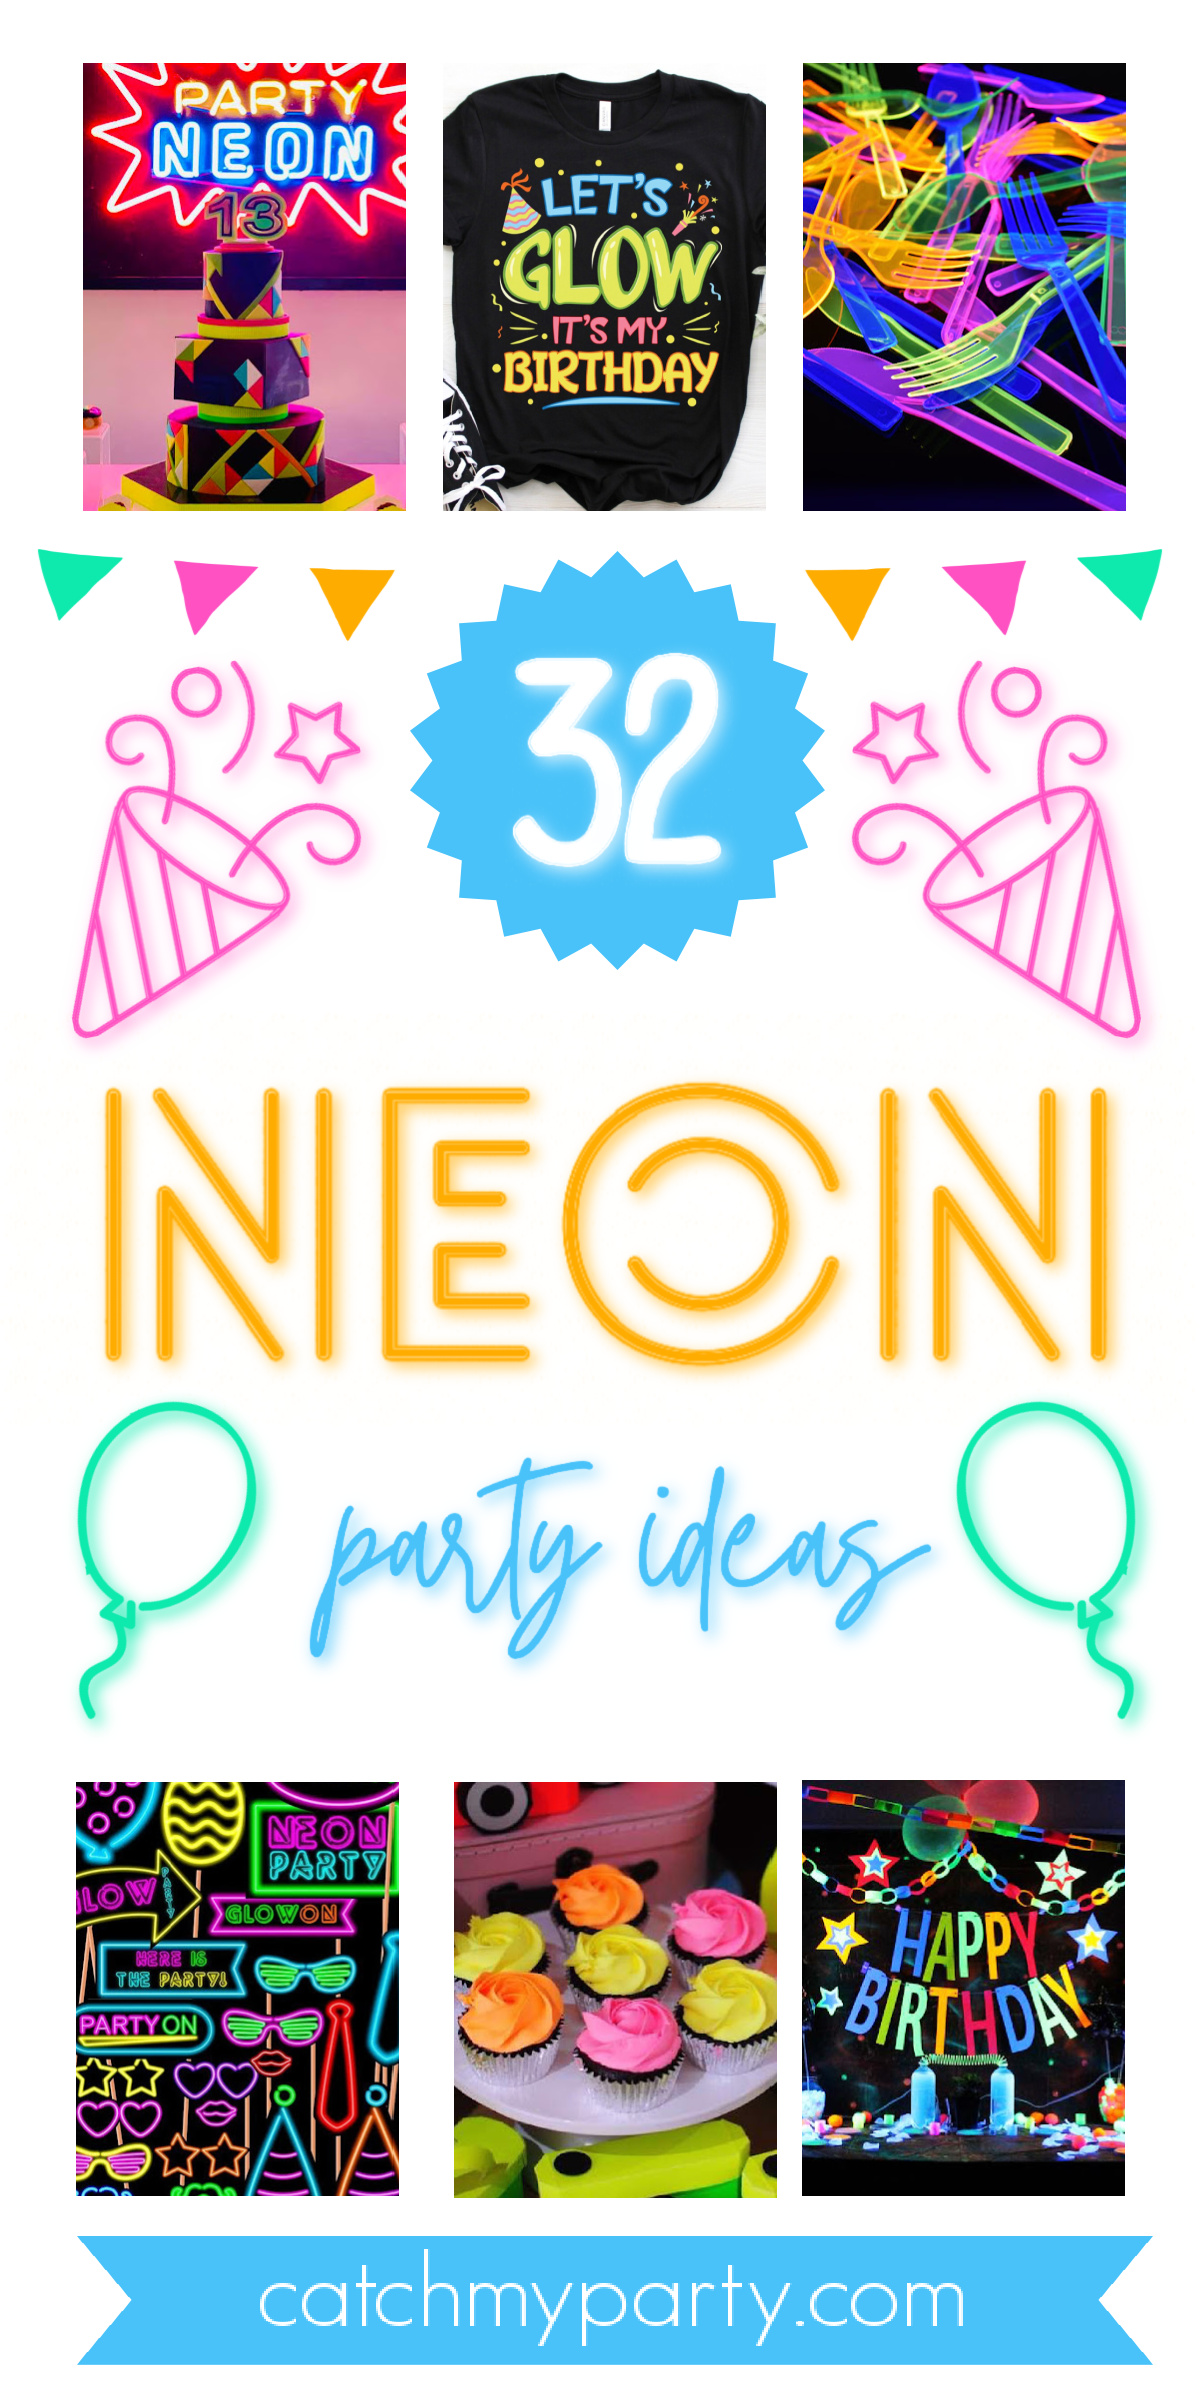 32 TRENDING Neon Party Ideas!